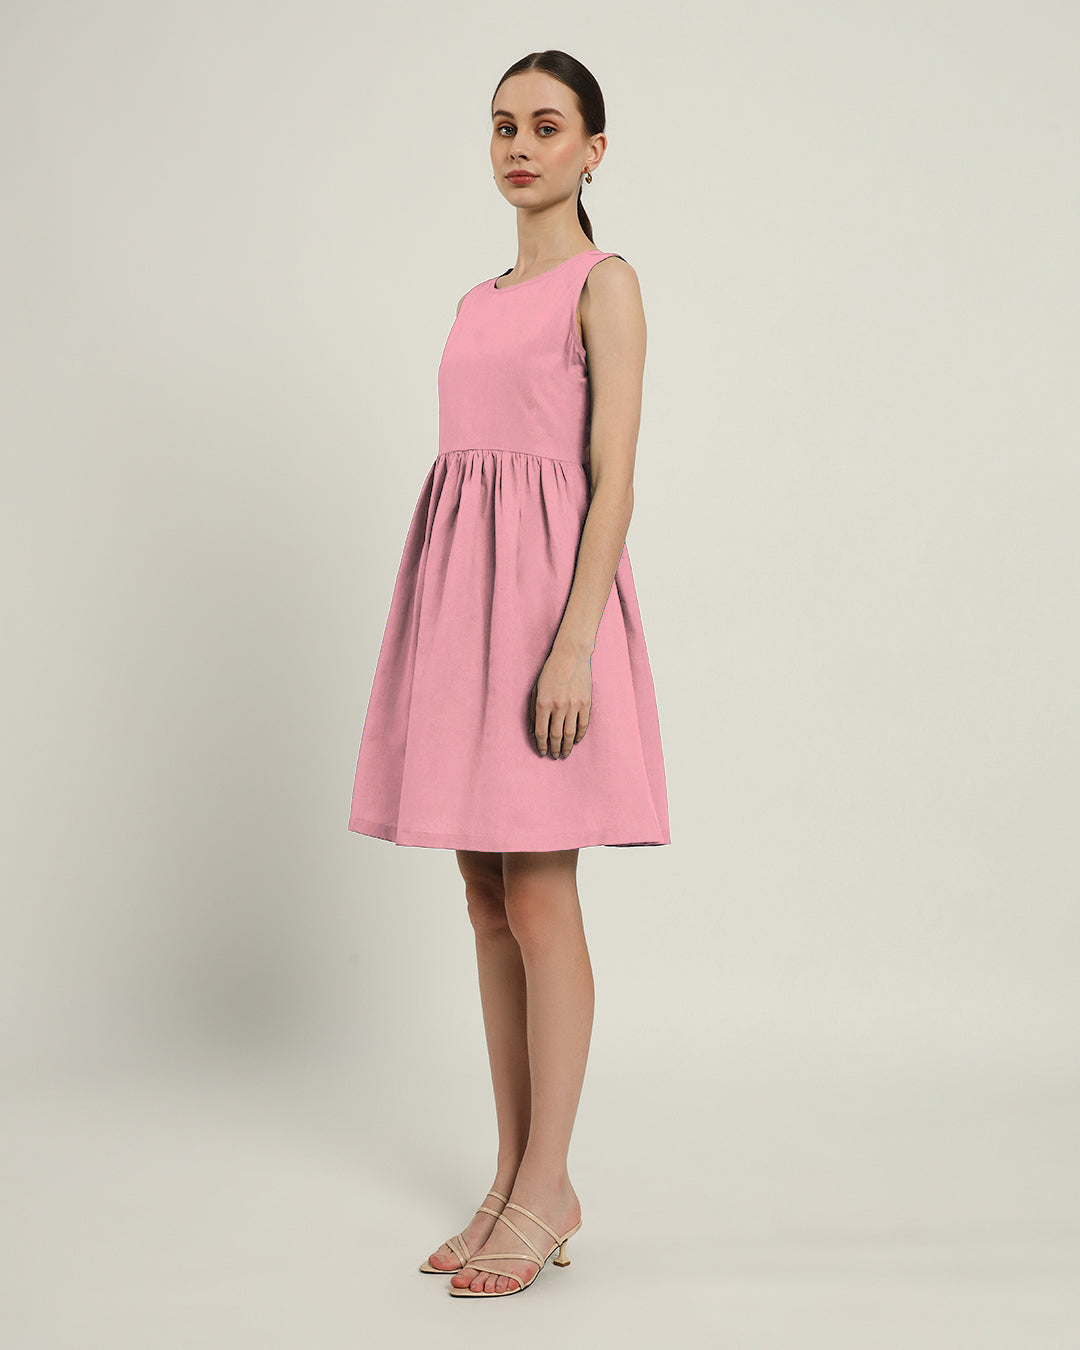 The Chania Fondant Pink Cotton Dress